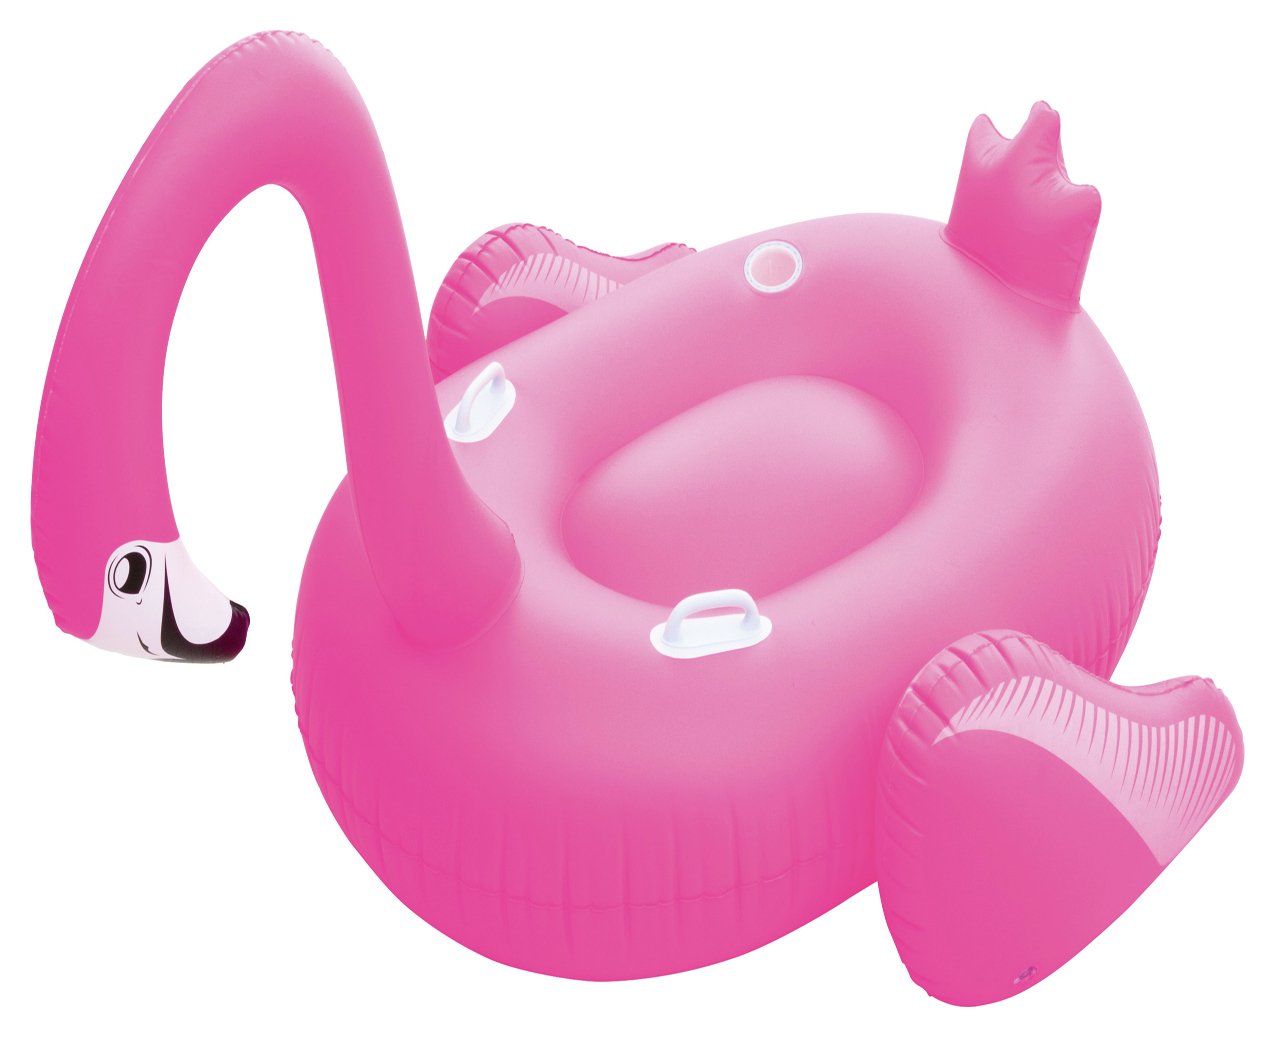 Bestway Inflatable Flamingo Ride-On.